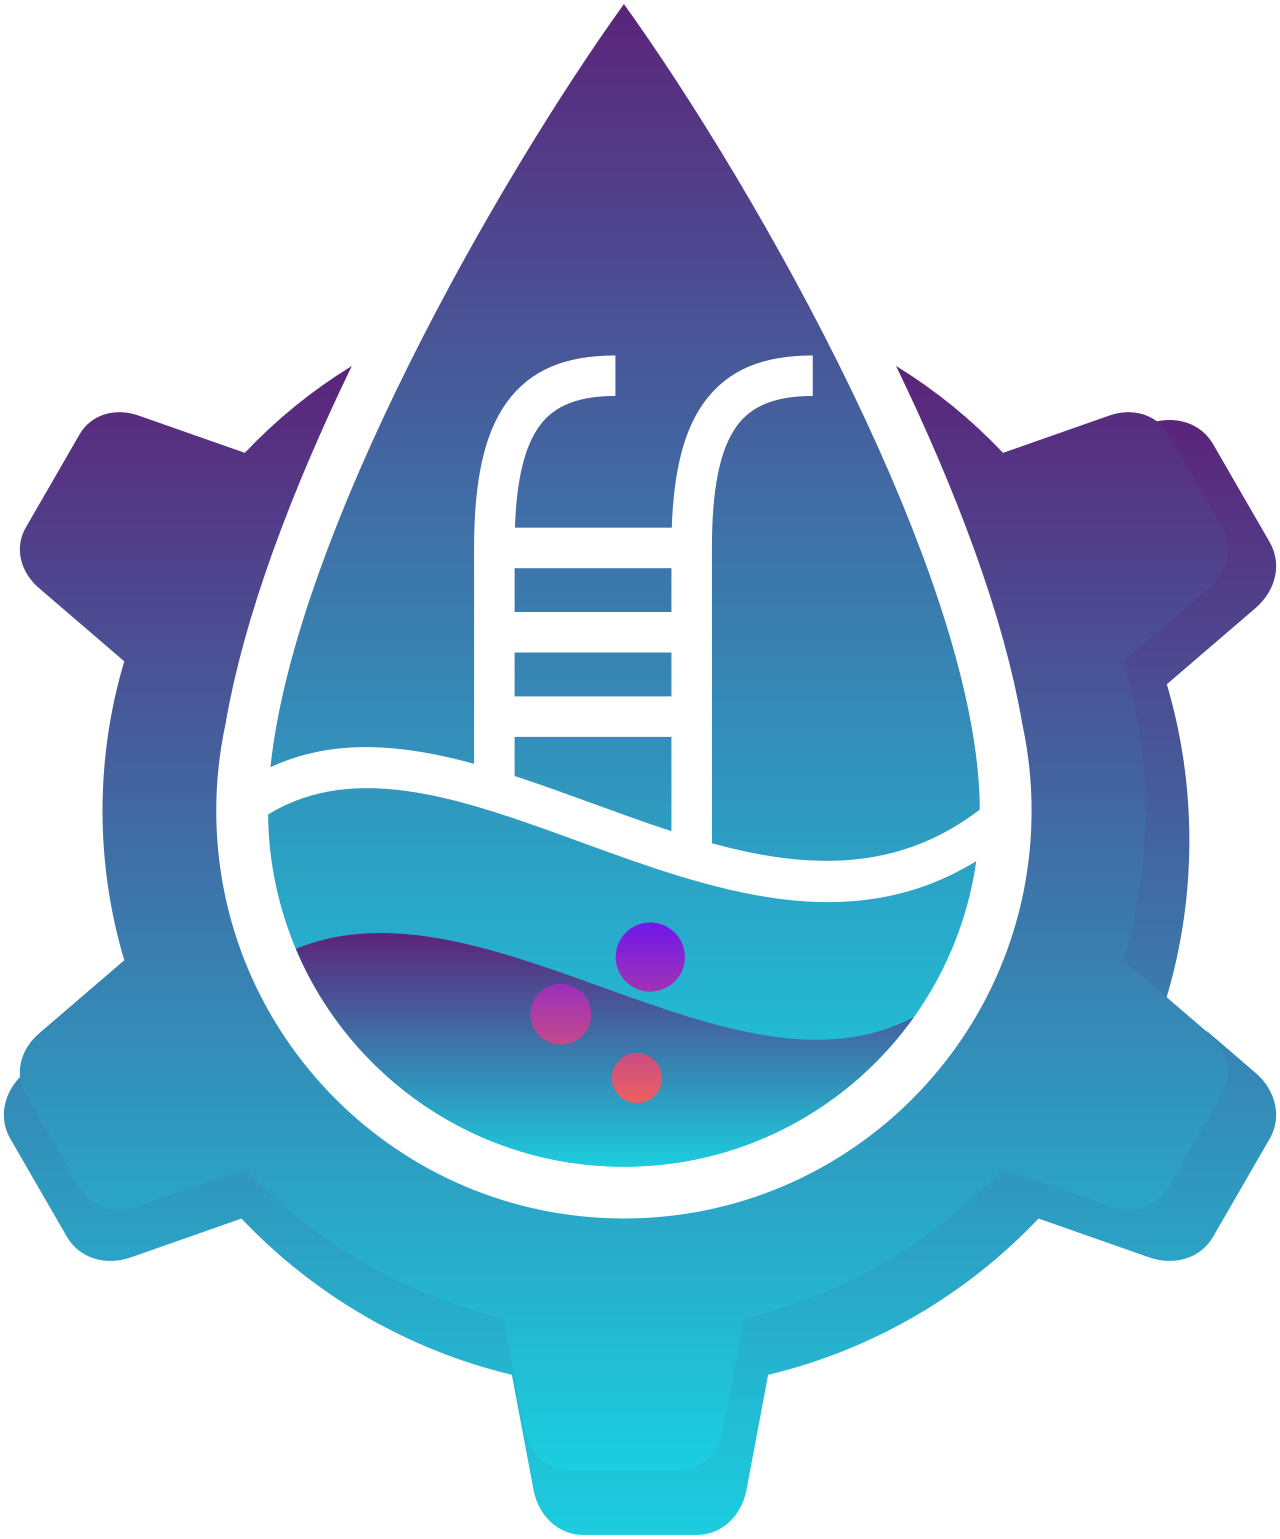 Leak detection specialists / pool diver 's logo